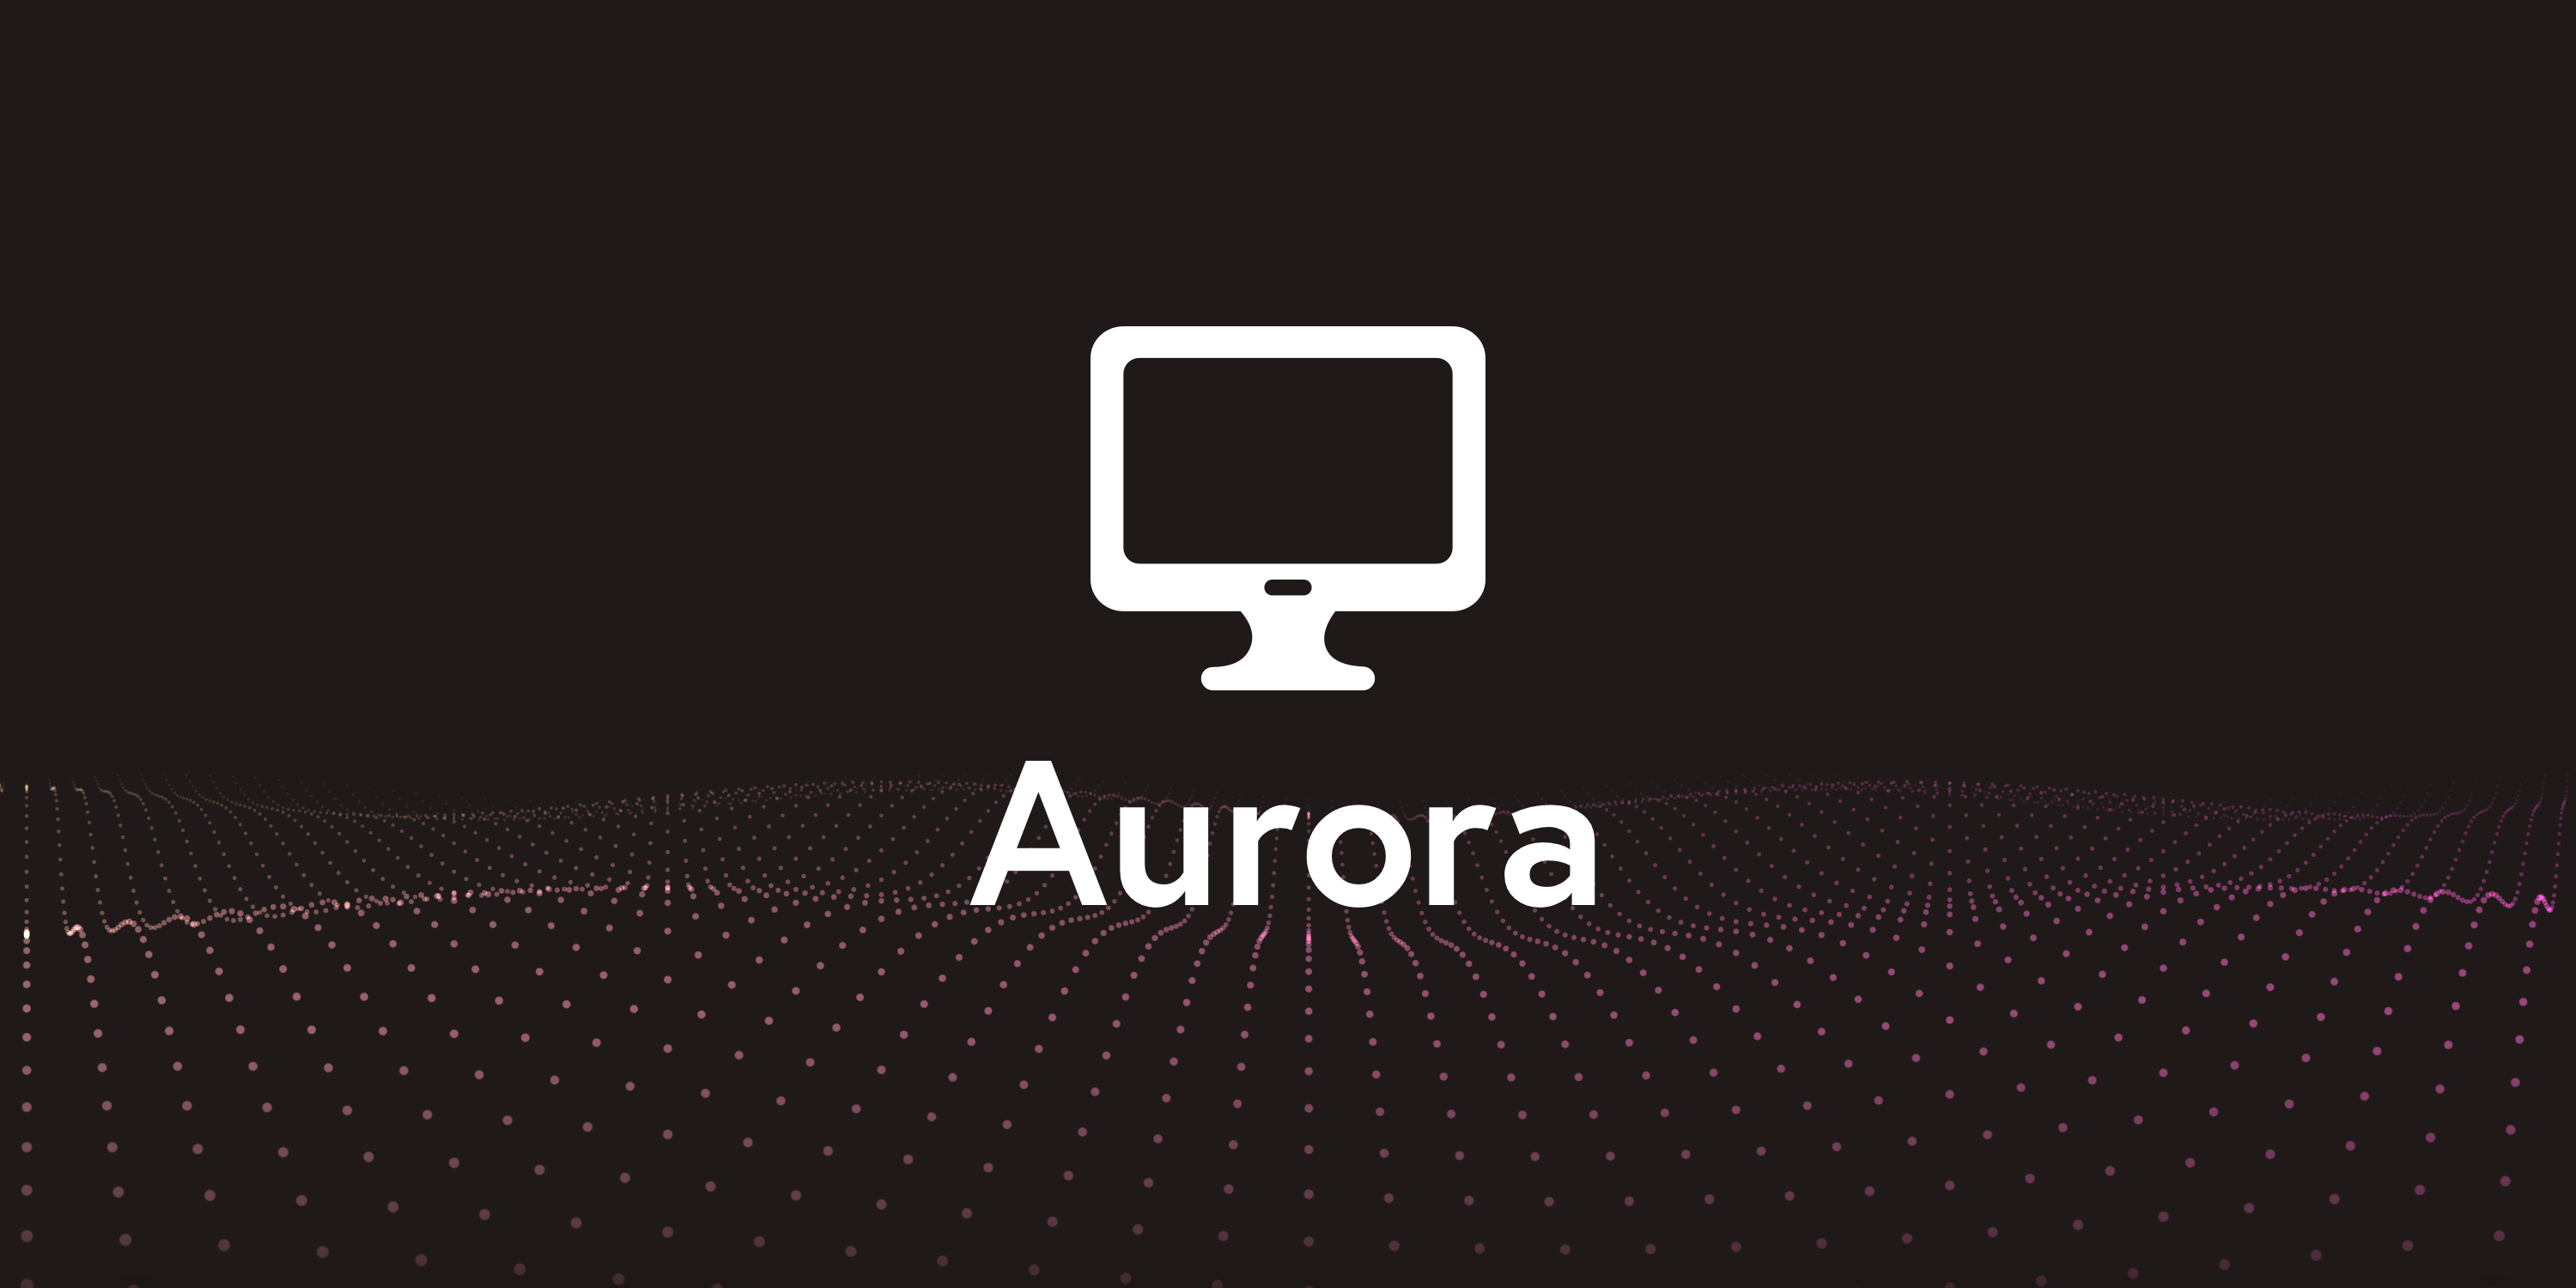 Meet Aurora - New Framework7 Desktop Theme